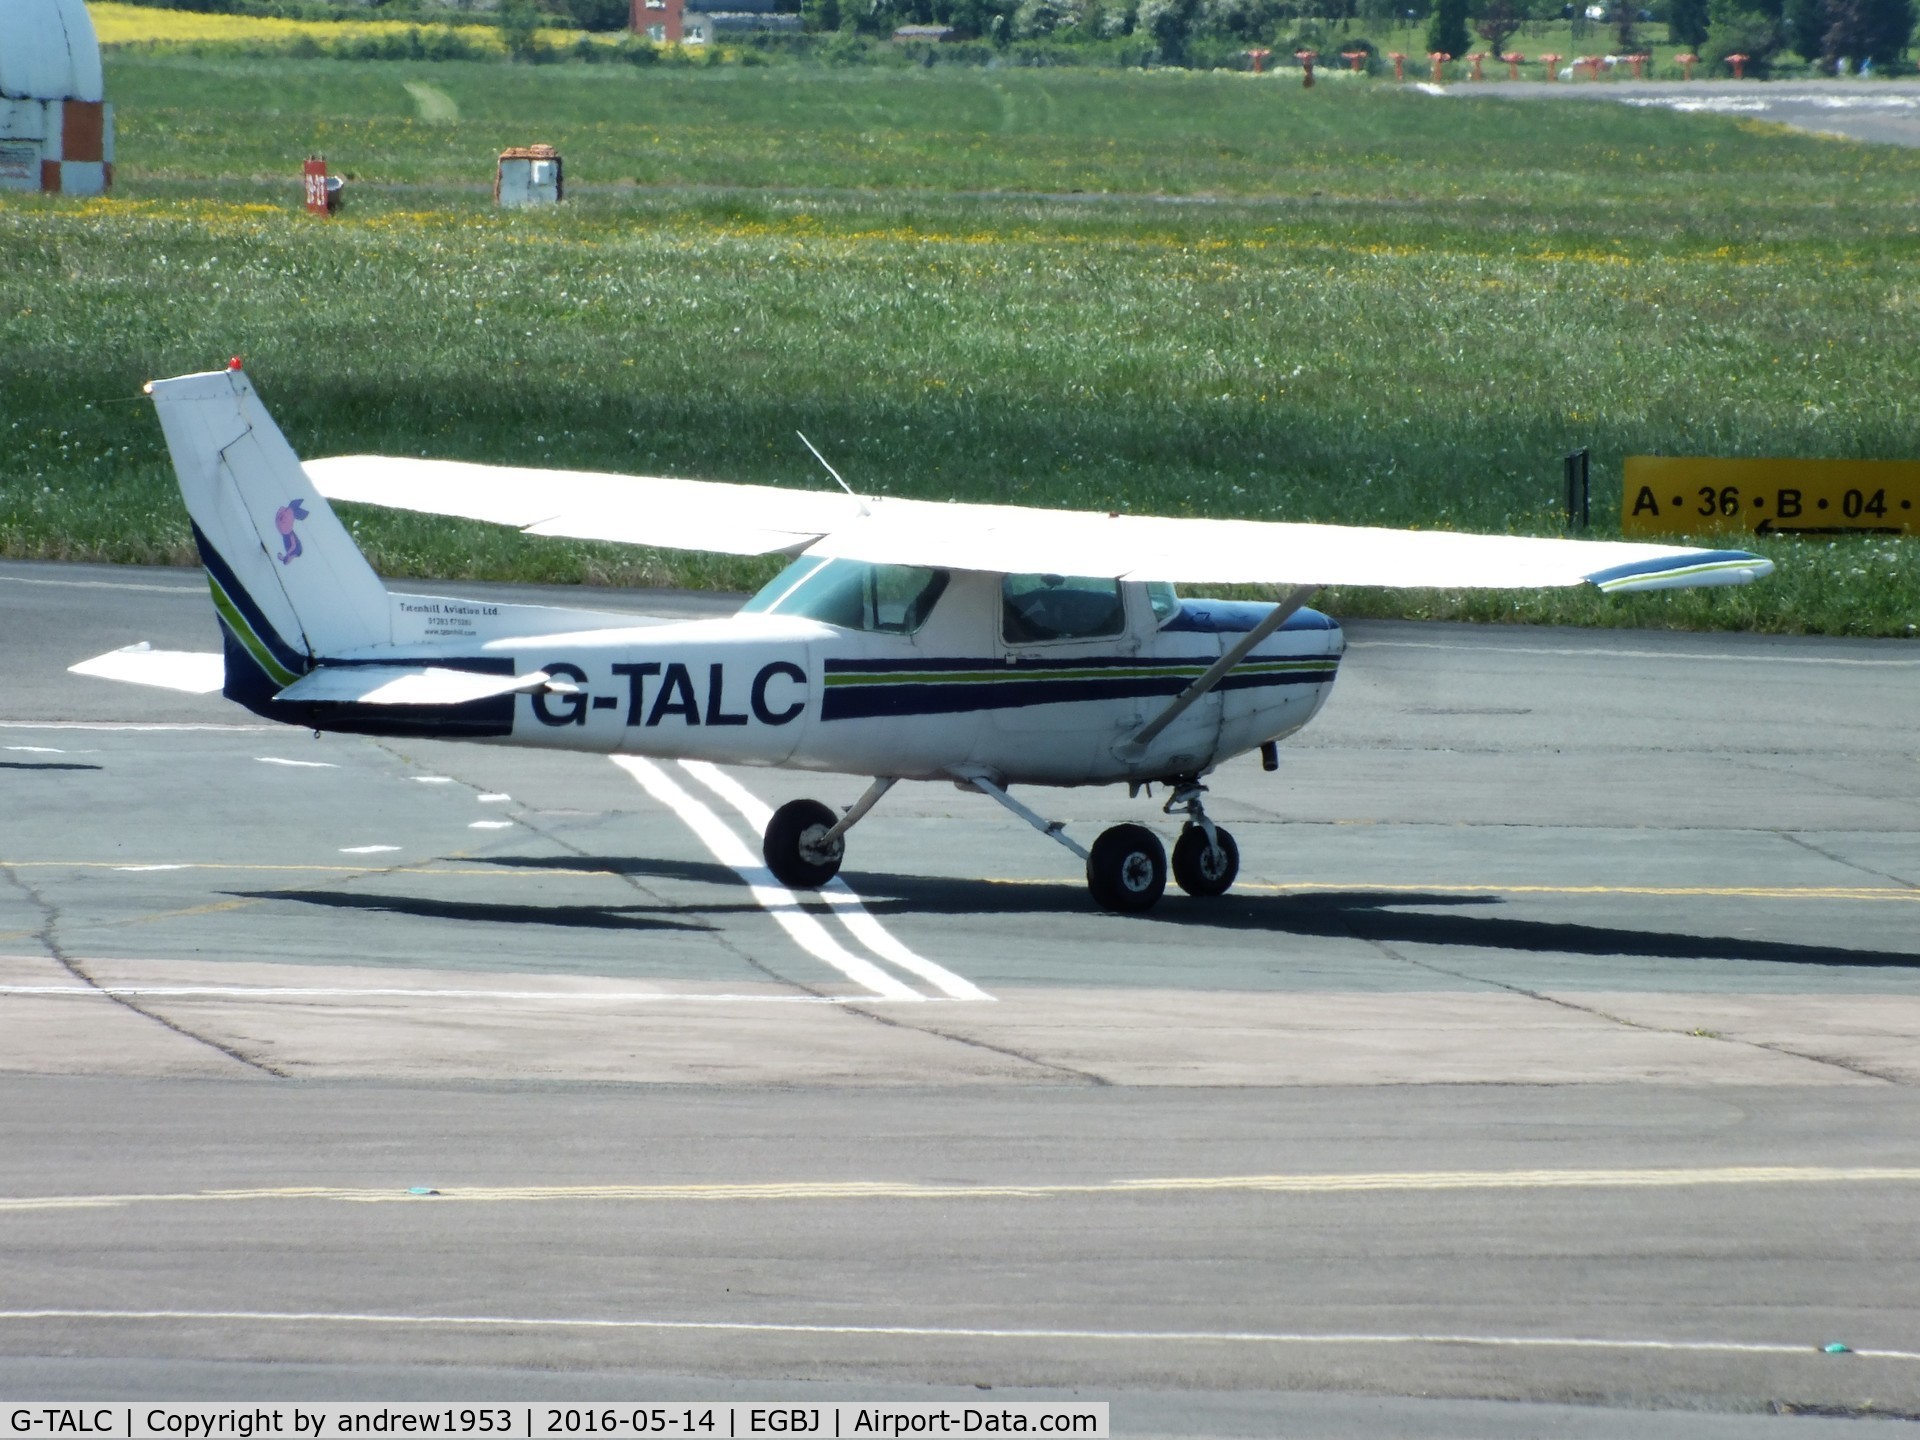 G-TALC, 1981 Cessna 152 C/N 152-84941, G-TALC at Gloucestershire Airport.